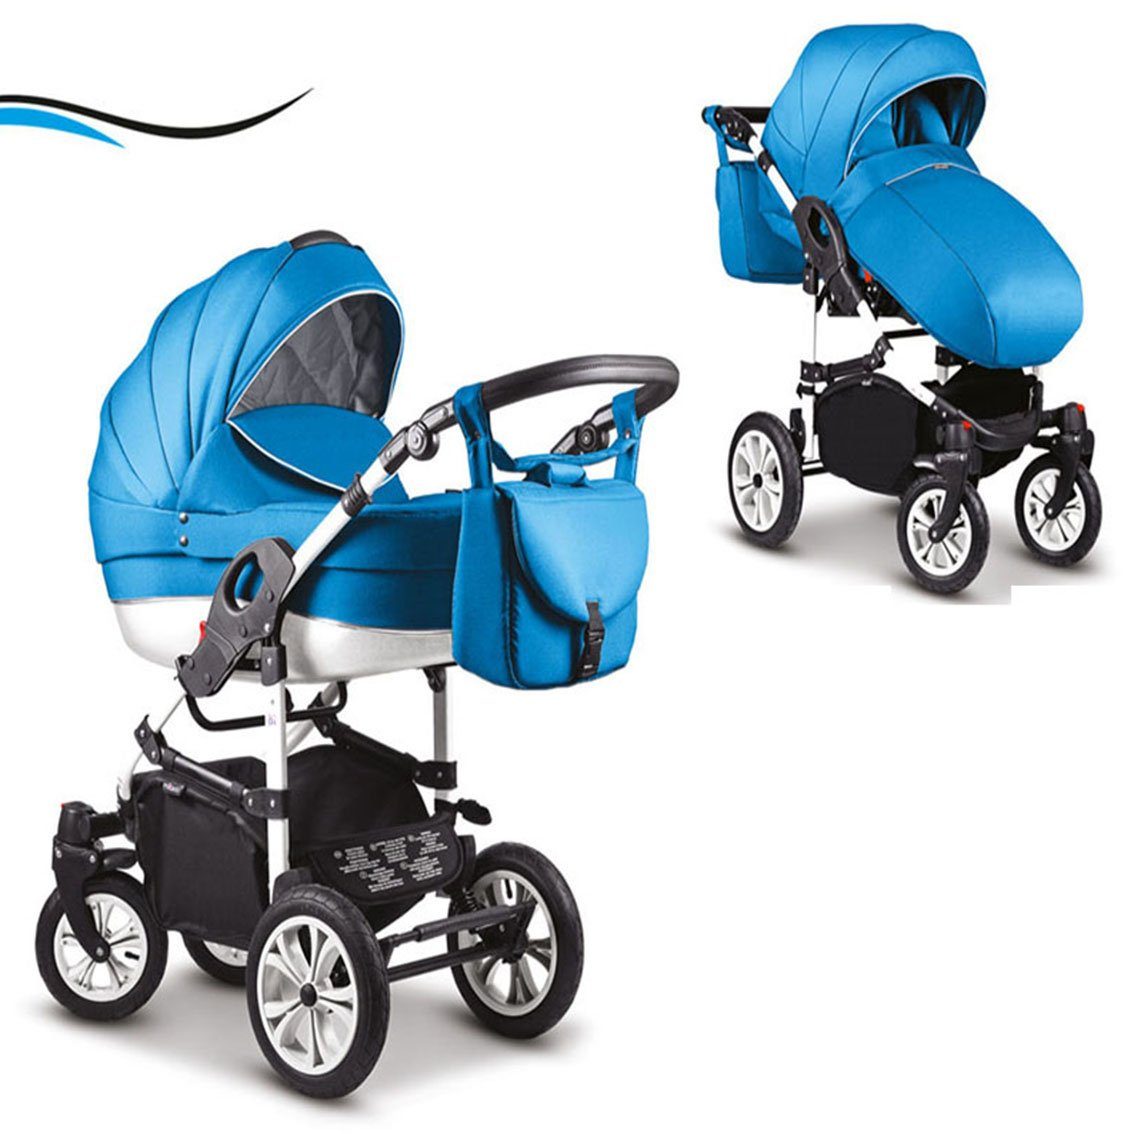 2 babies-on-wheels 16 13 in - Farben in Teile Kinderwagen-Set Kombi-Kinderwagen - Cosmo 1 Türkis-Weiß